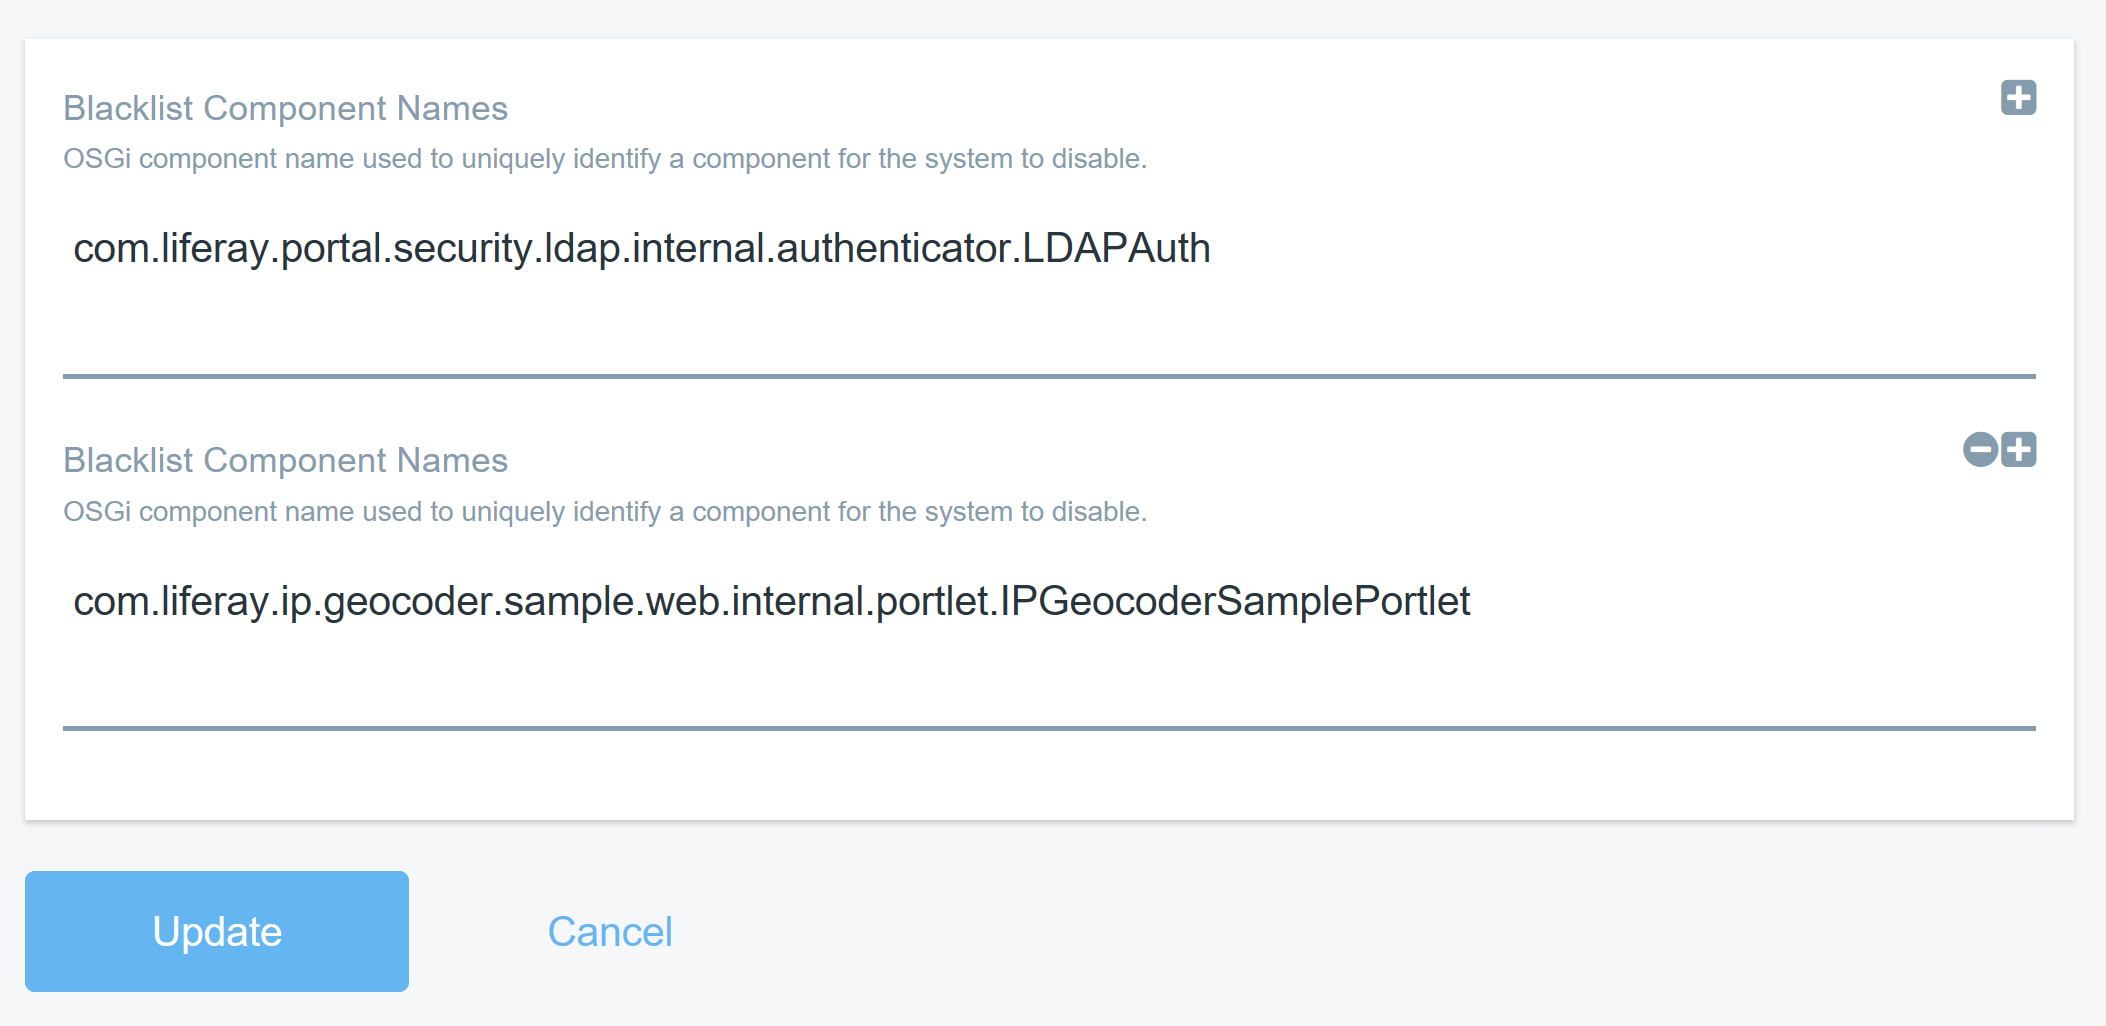 Figure 2: This blacklist disables the components
com.liferay.portal.security.ldap.internal.authenticator.LDAPAuth and
com.liferay.ip.geocoder.sample.web.internal.portlet.IPGeocoderSamplePortlet.